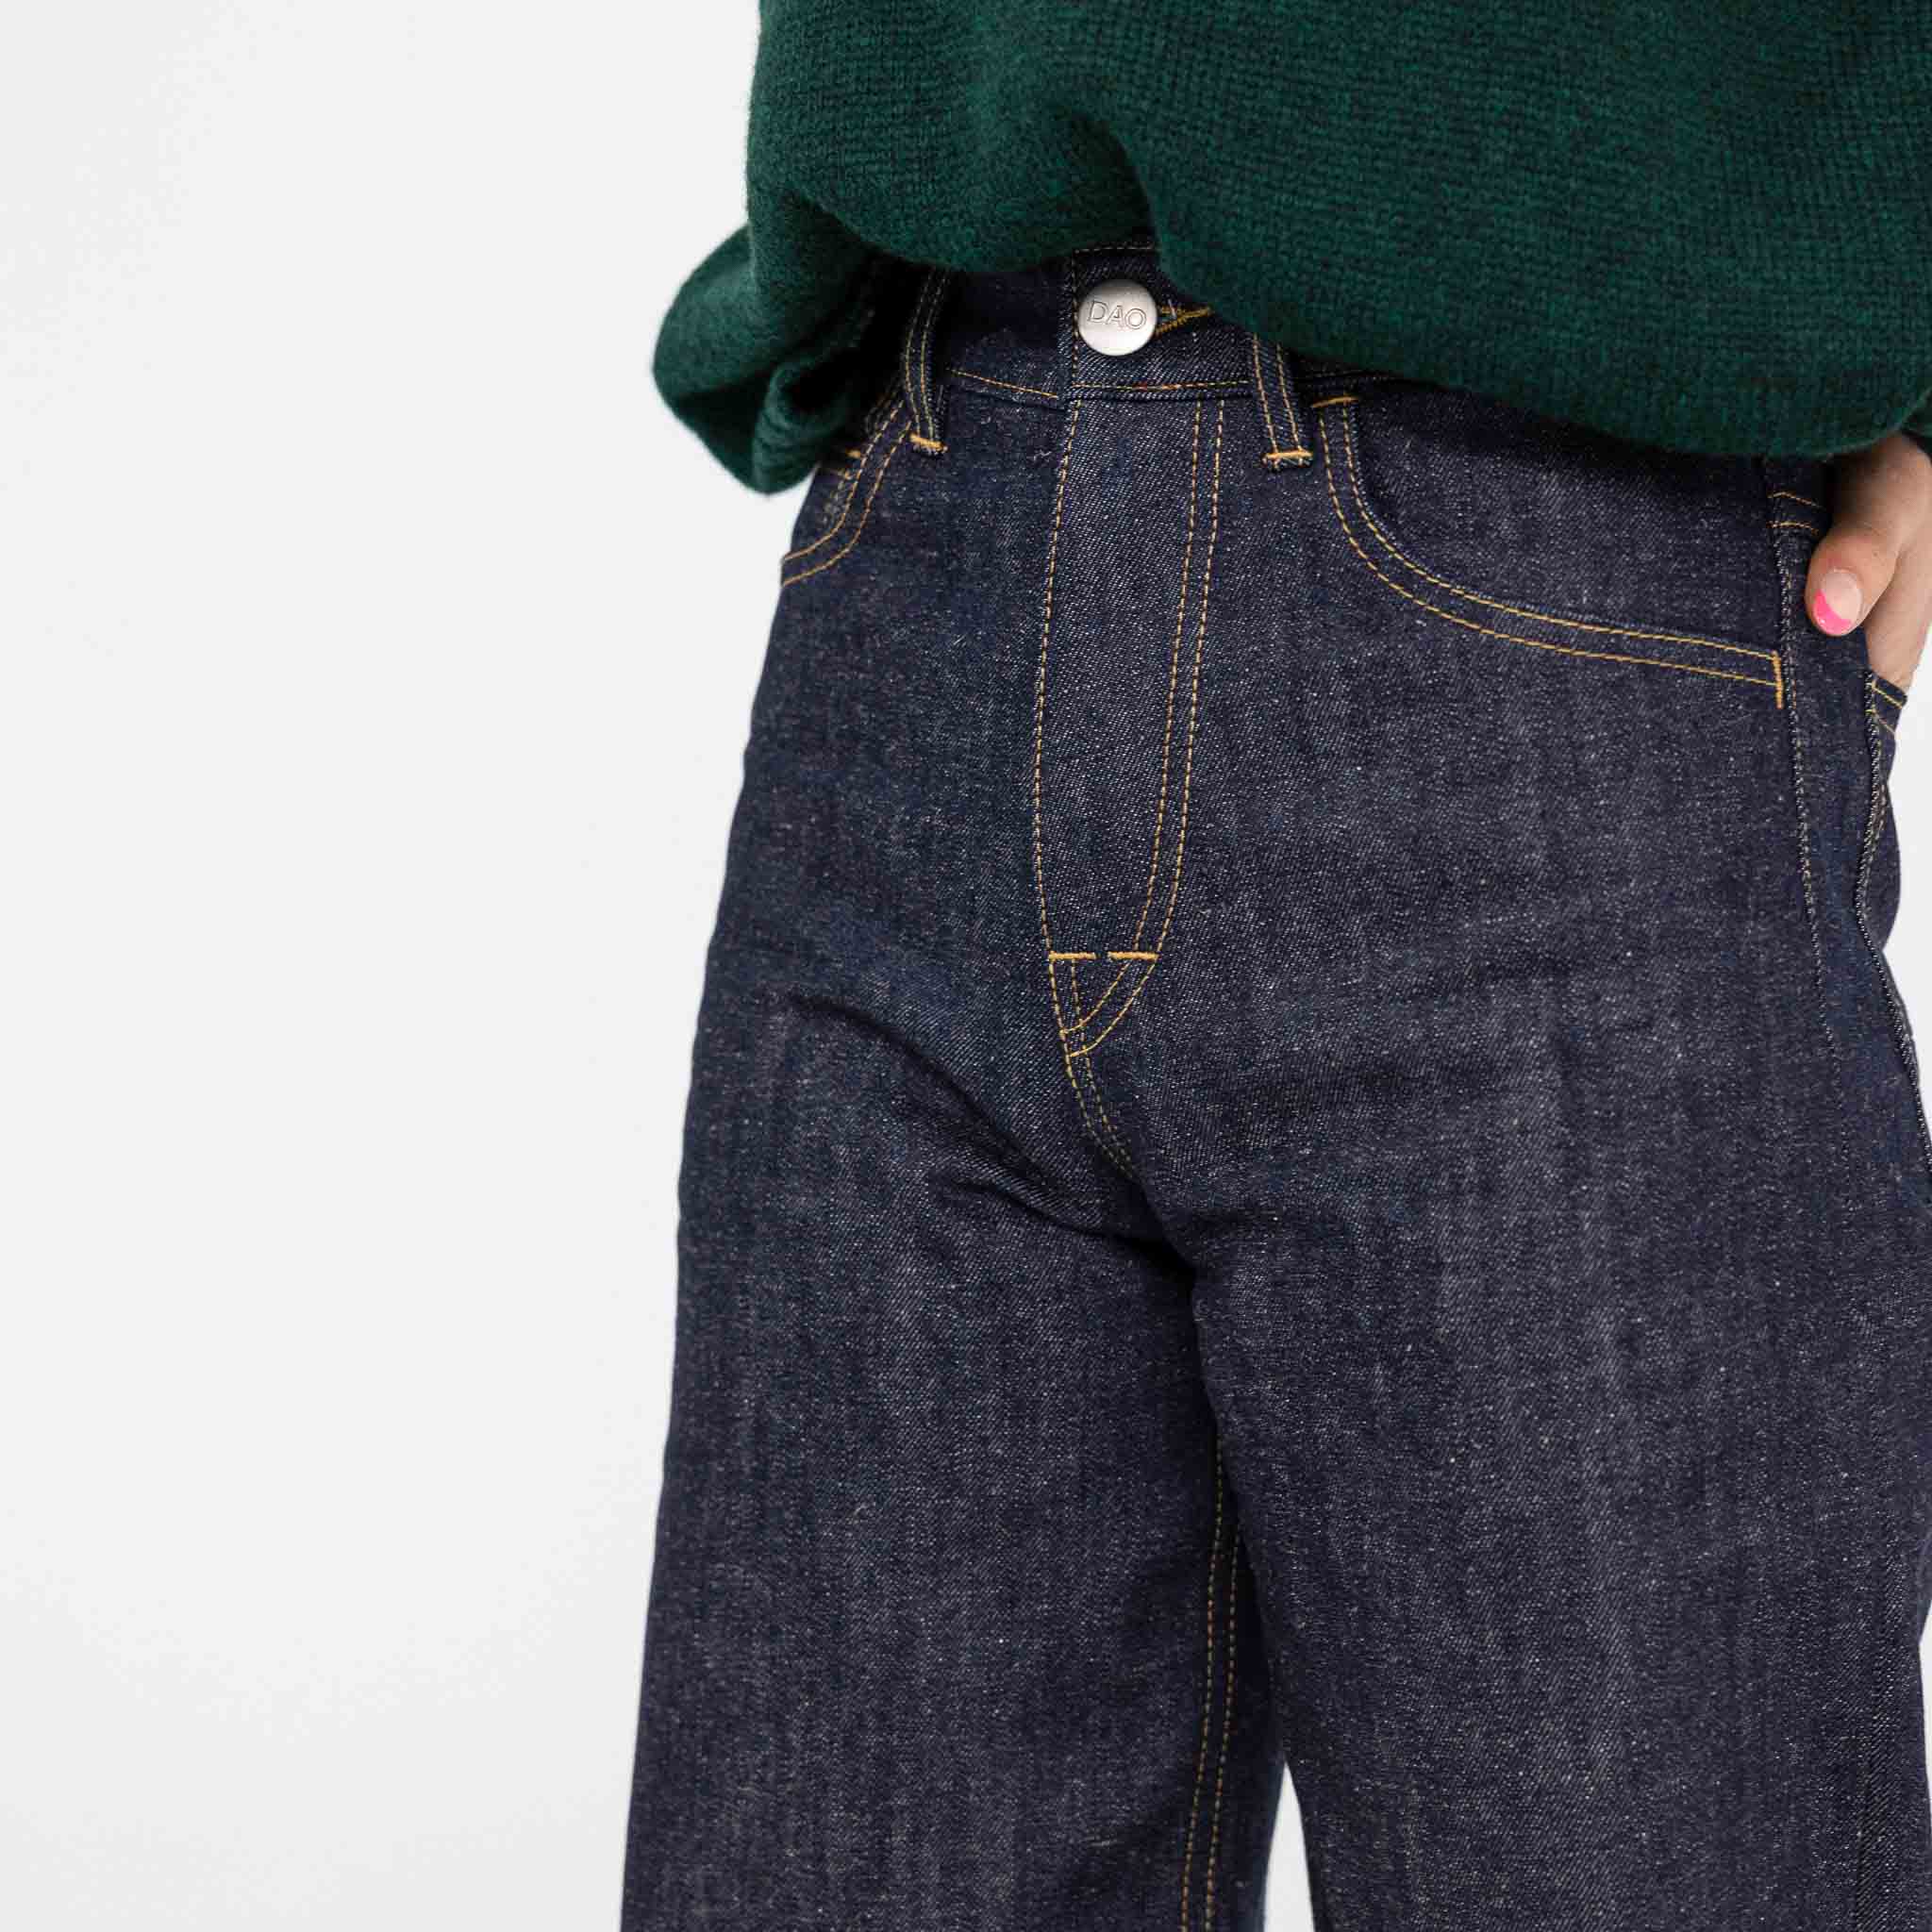 Bermuda short homme jeans brut coton bio - Made in France